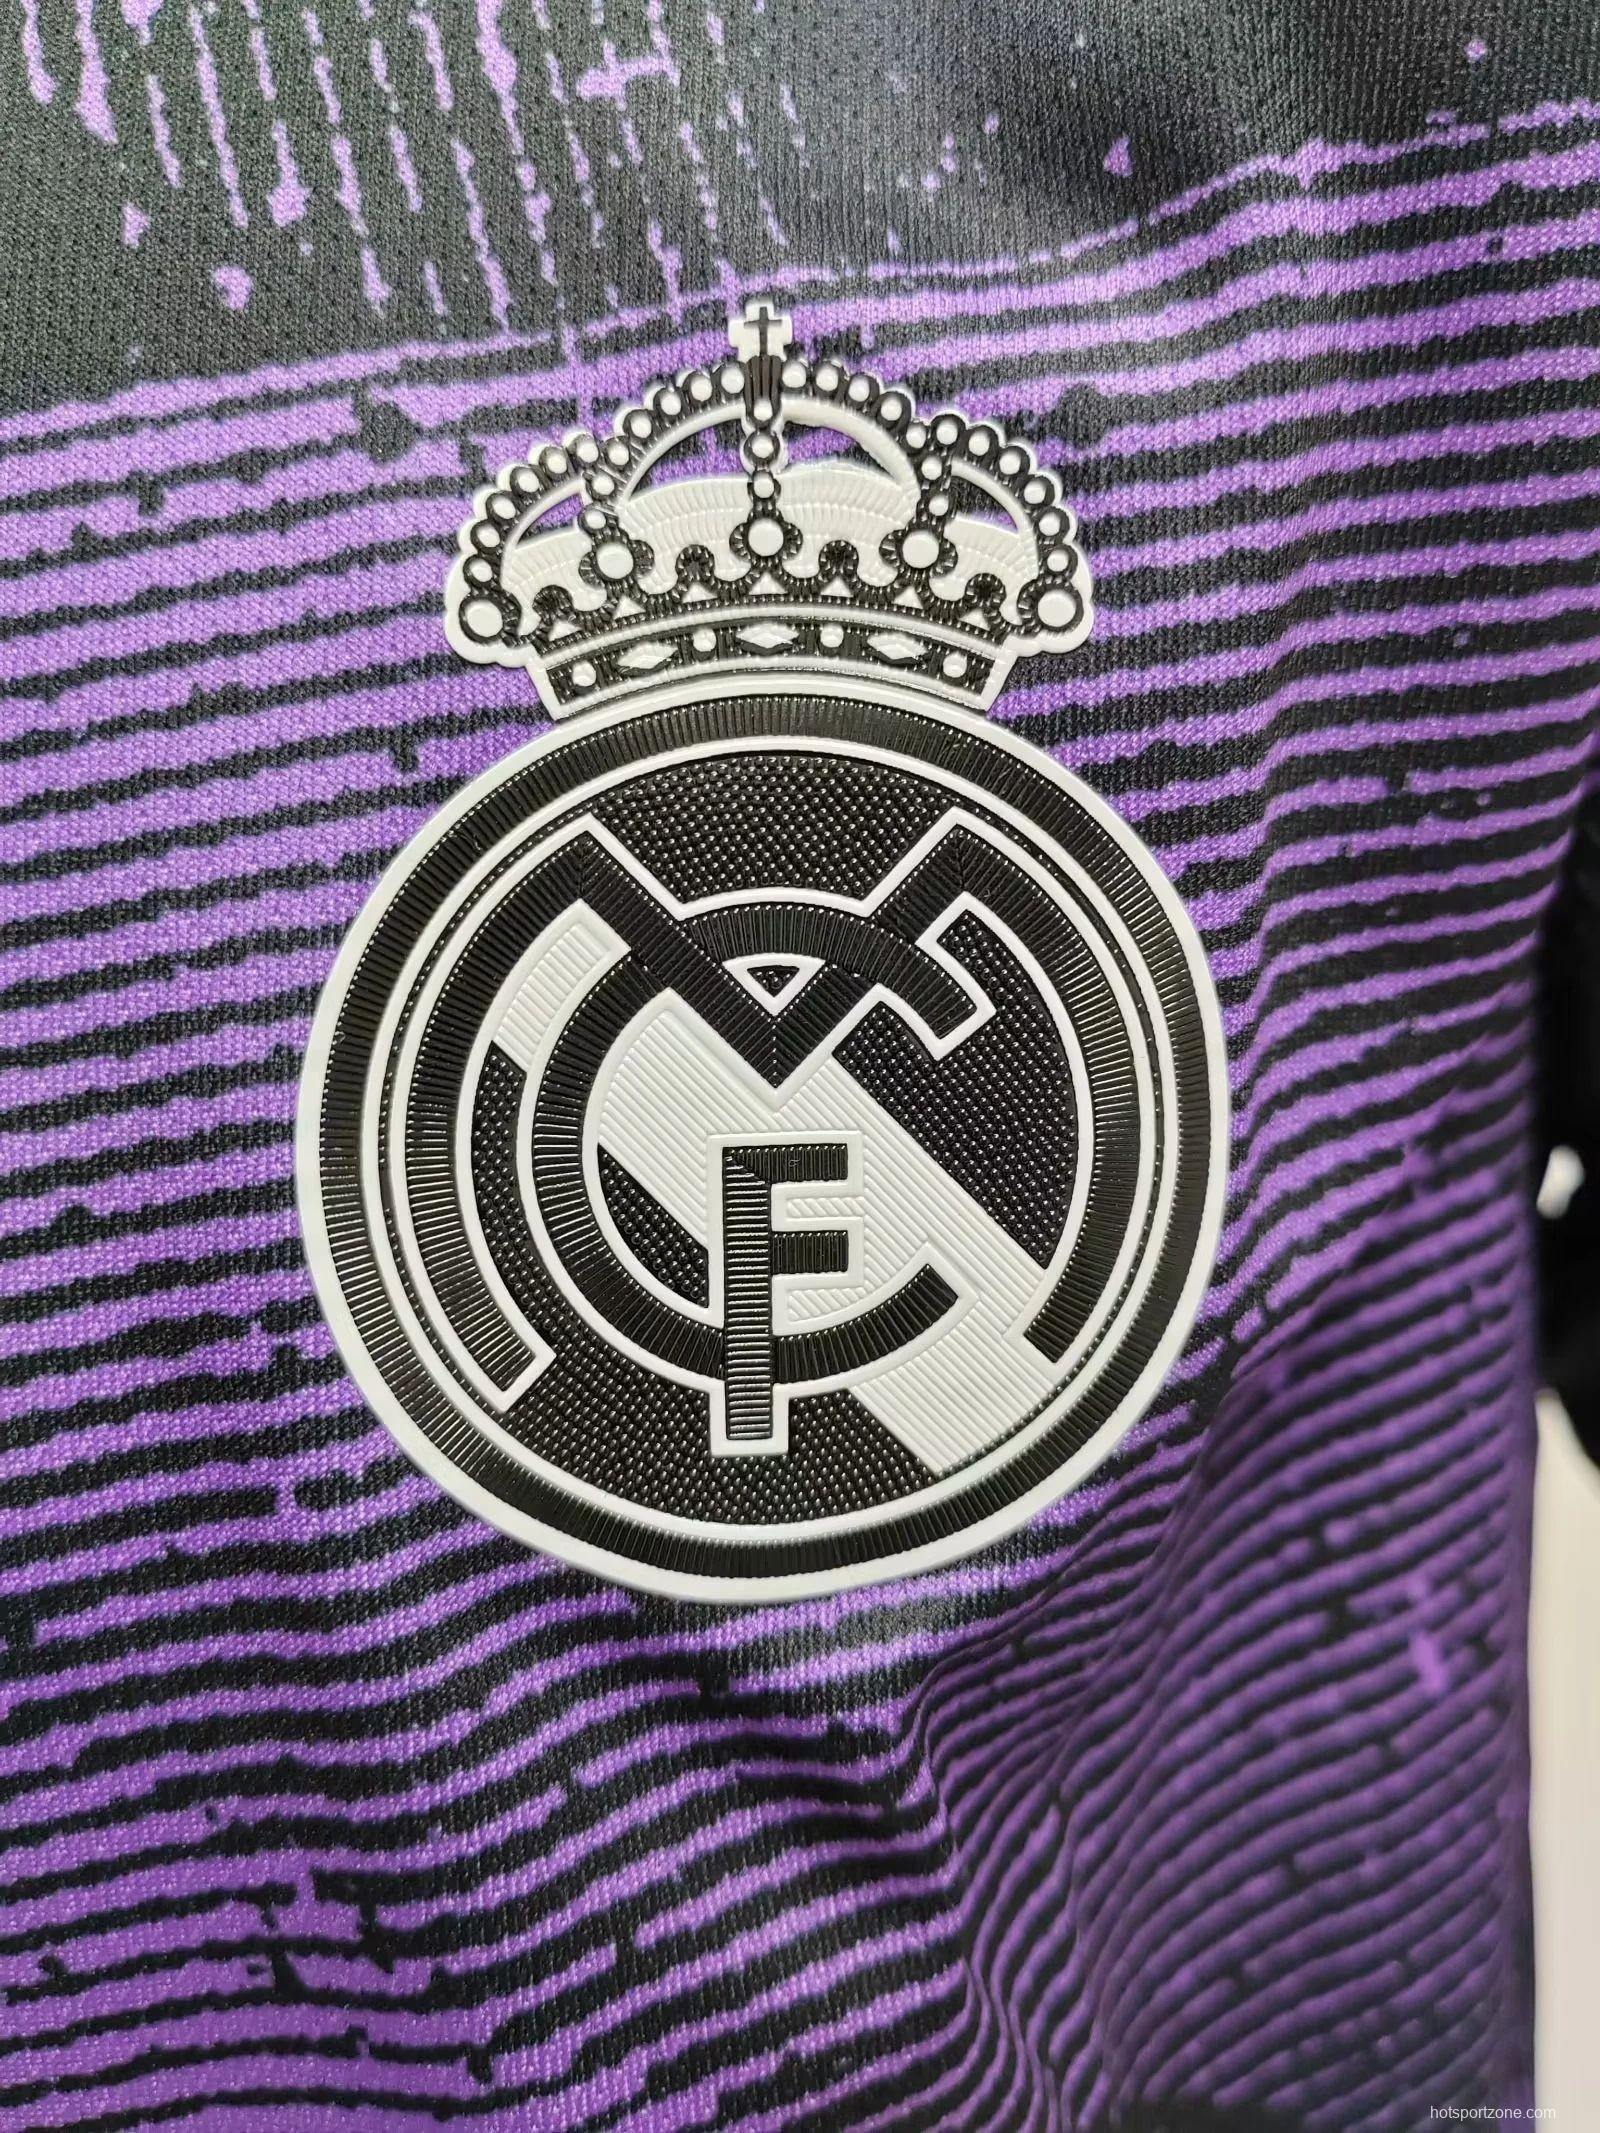 23/24 Real Madrid Purple Training Jersey